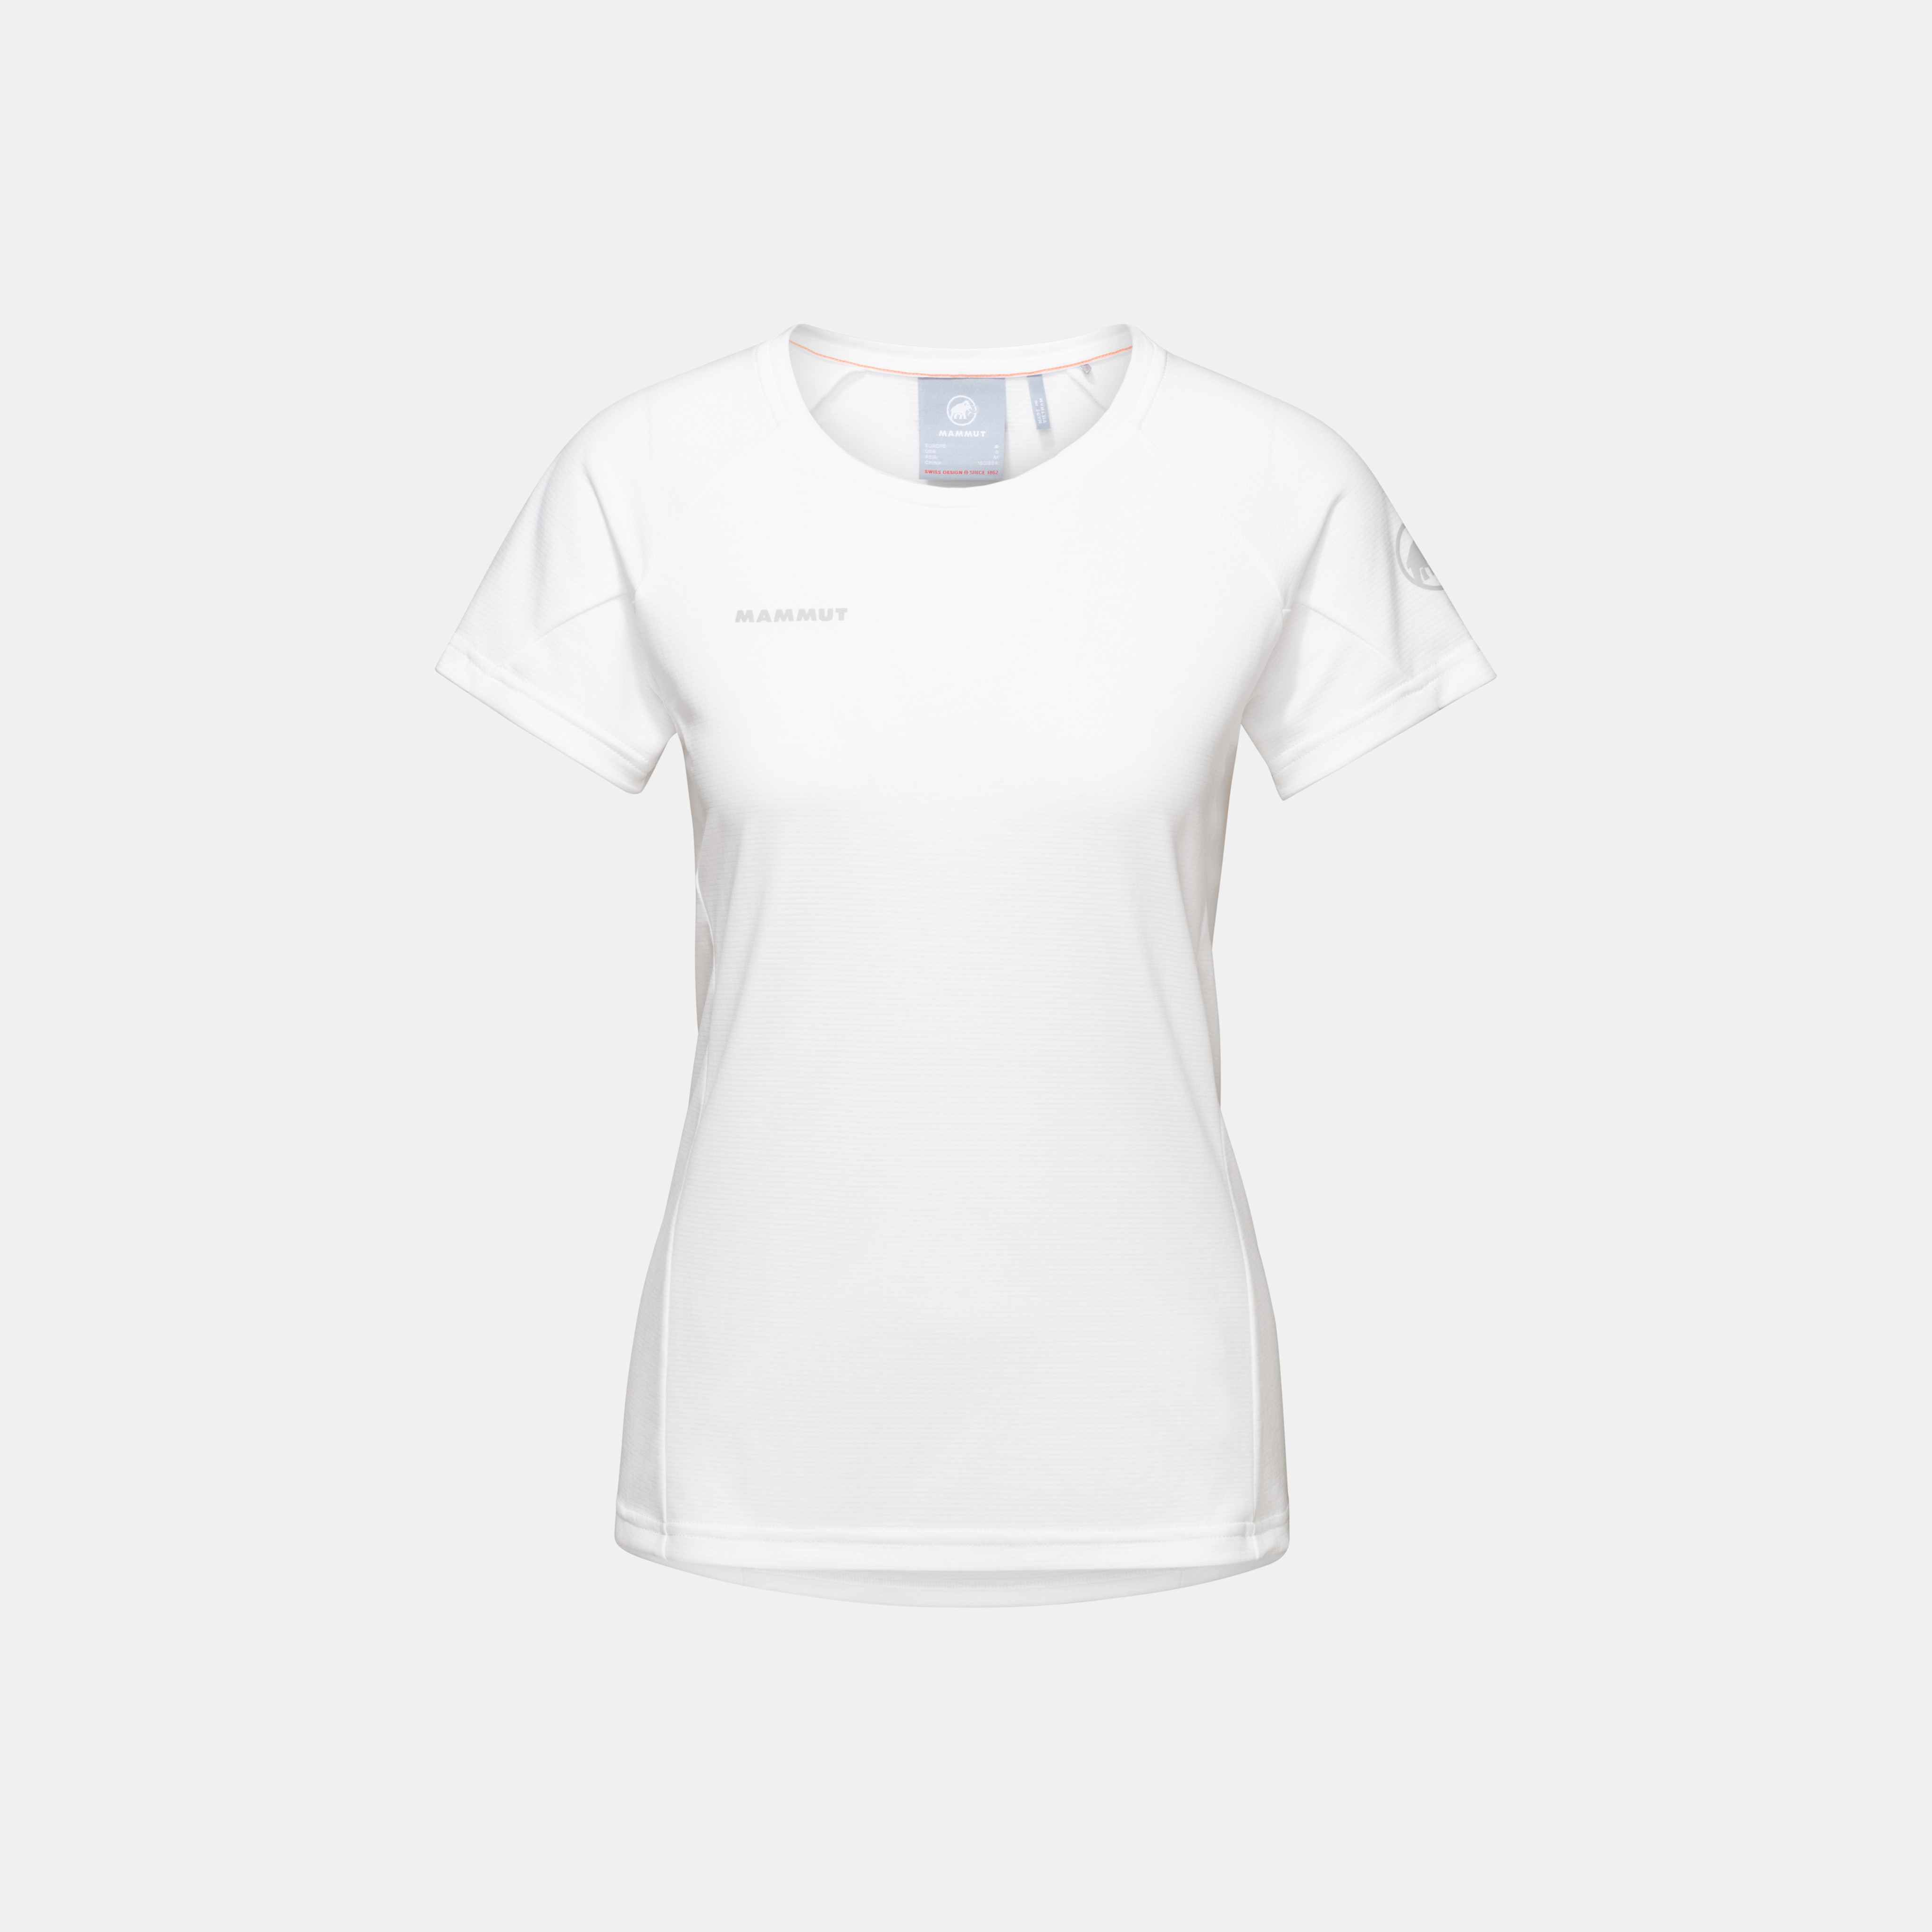 Aegility FL T-Shirt Women product image